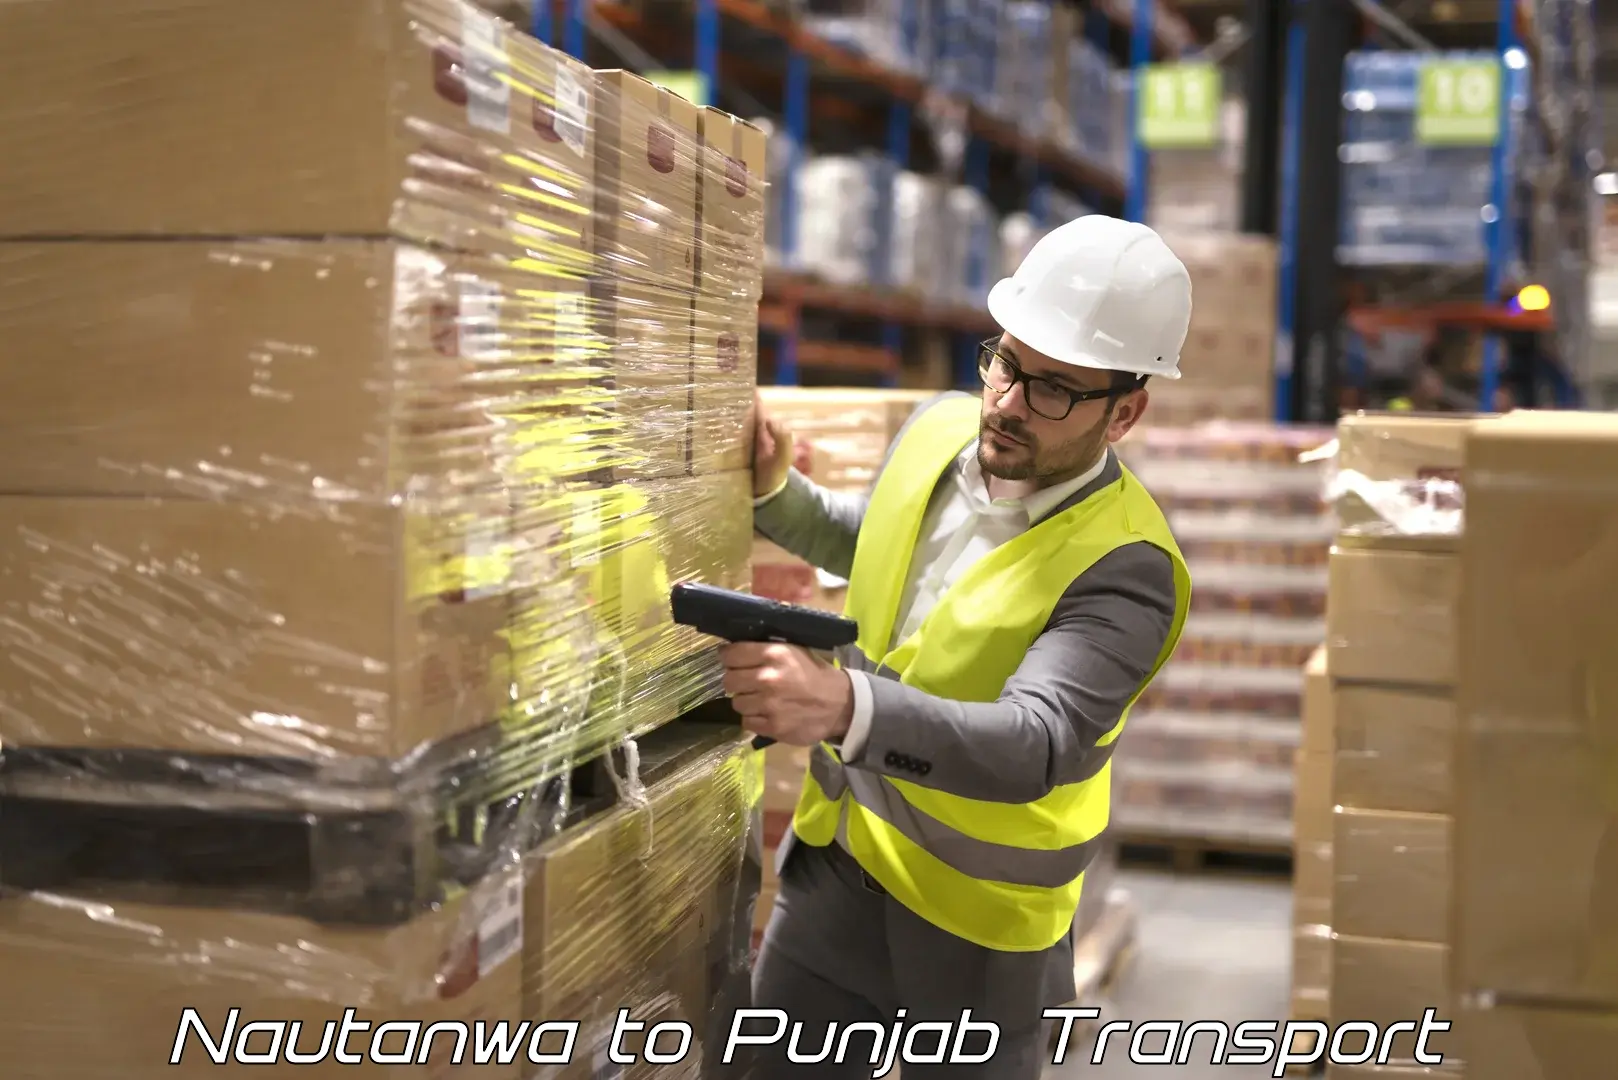 Goods delivery service Nautanwa to Punjab